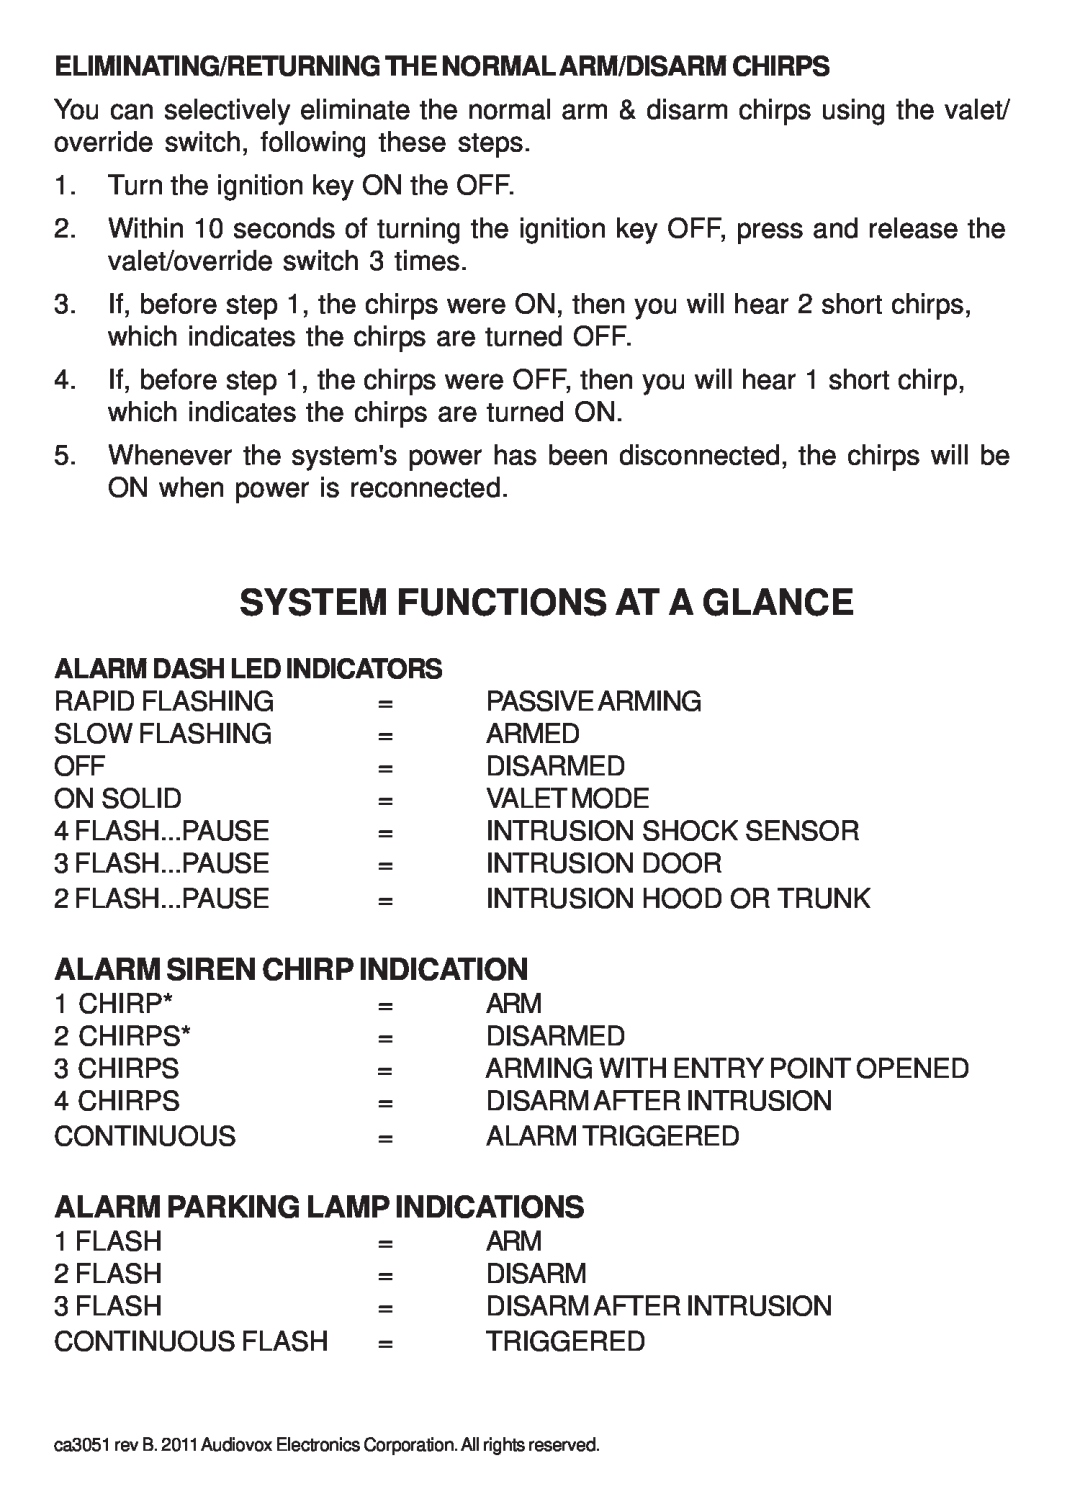 Audiovox CA 3051 manual Eliminating/Returning The Normalarm/Disarm Chirps, Alarm Dash Led Indicators 